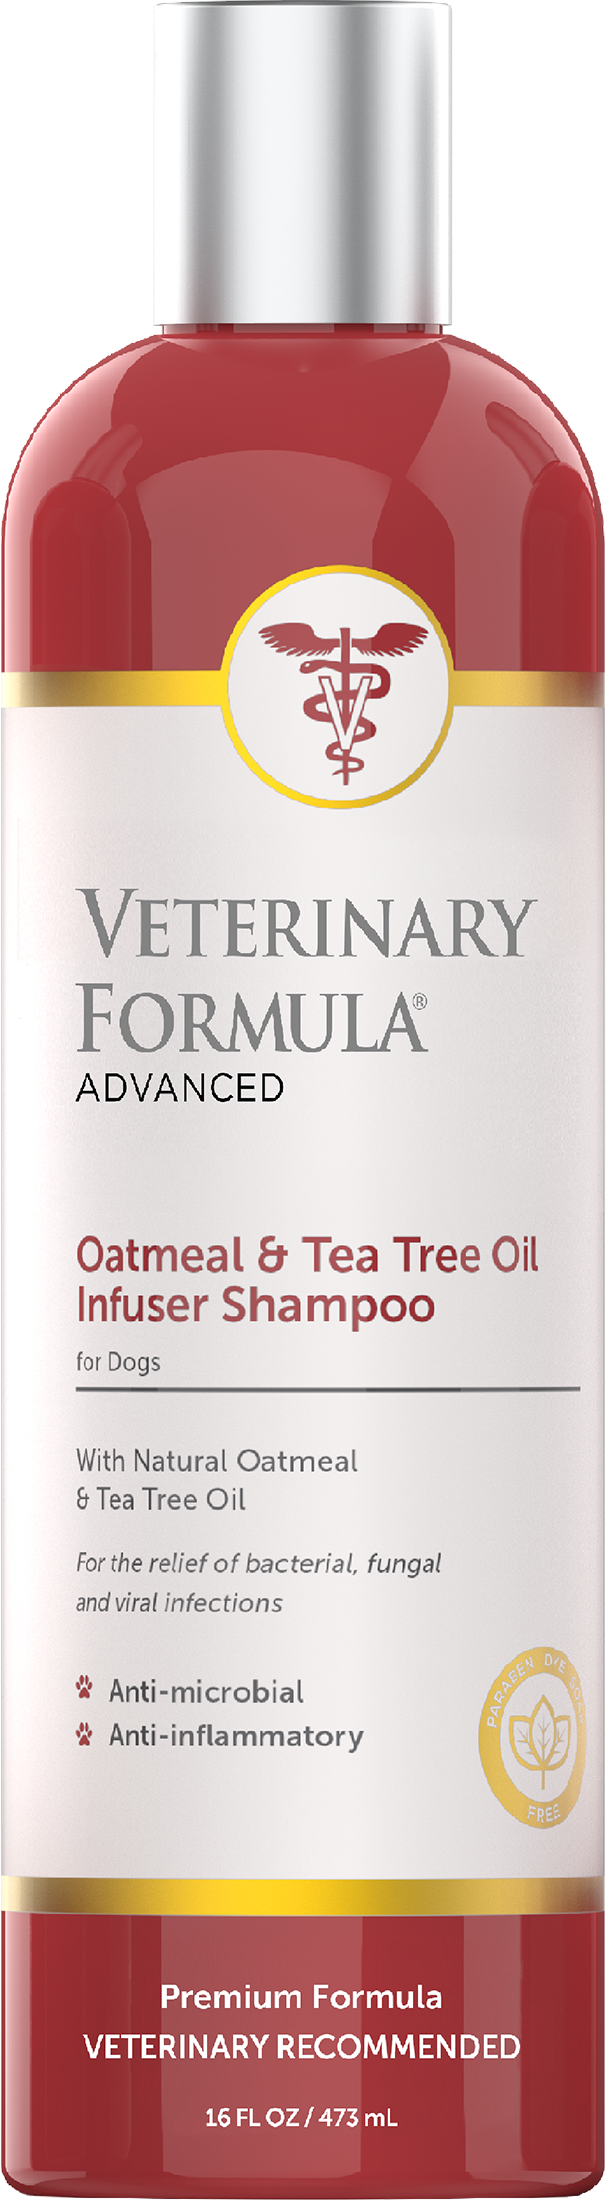 Oatmeal & Tea Tree Oil Infuser Shampoo